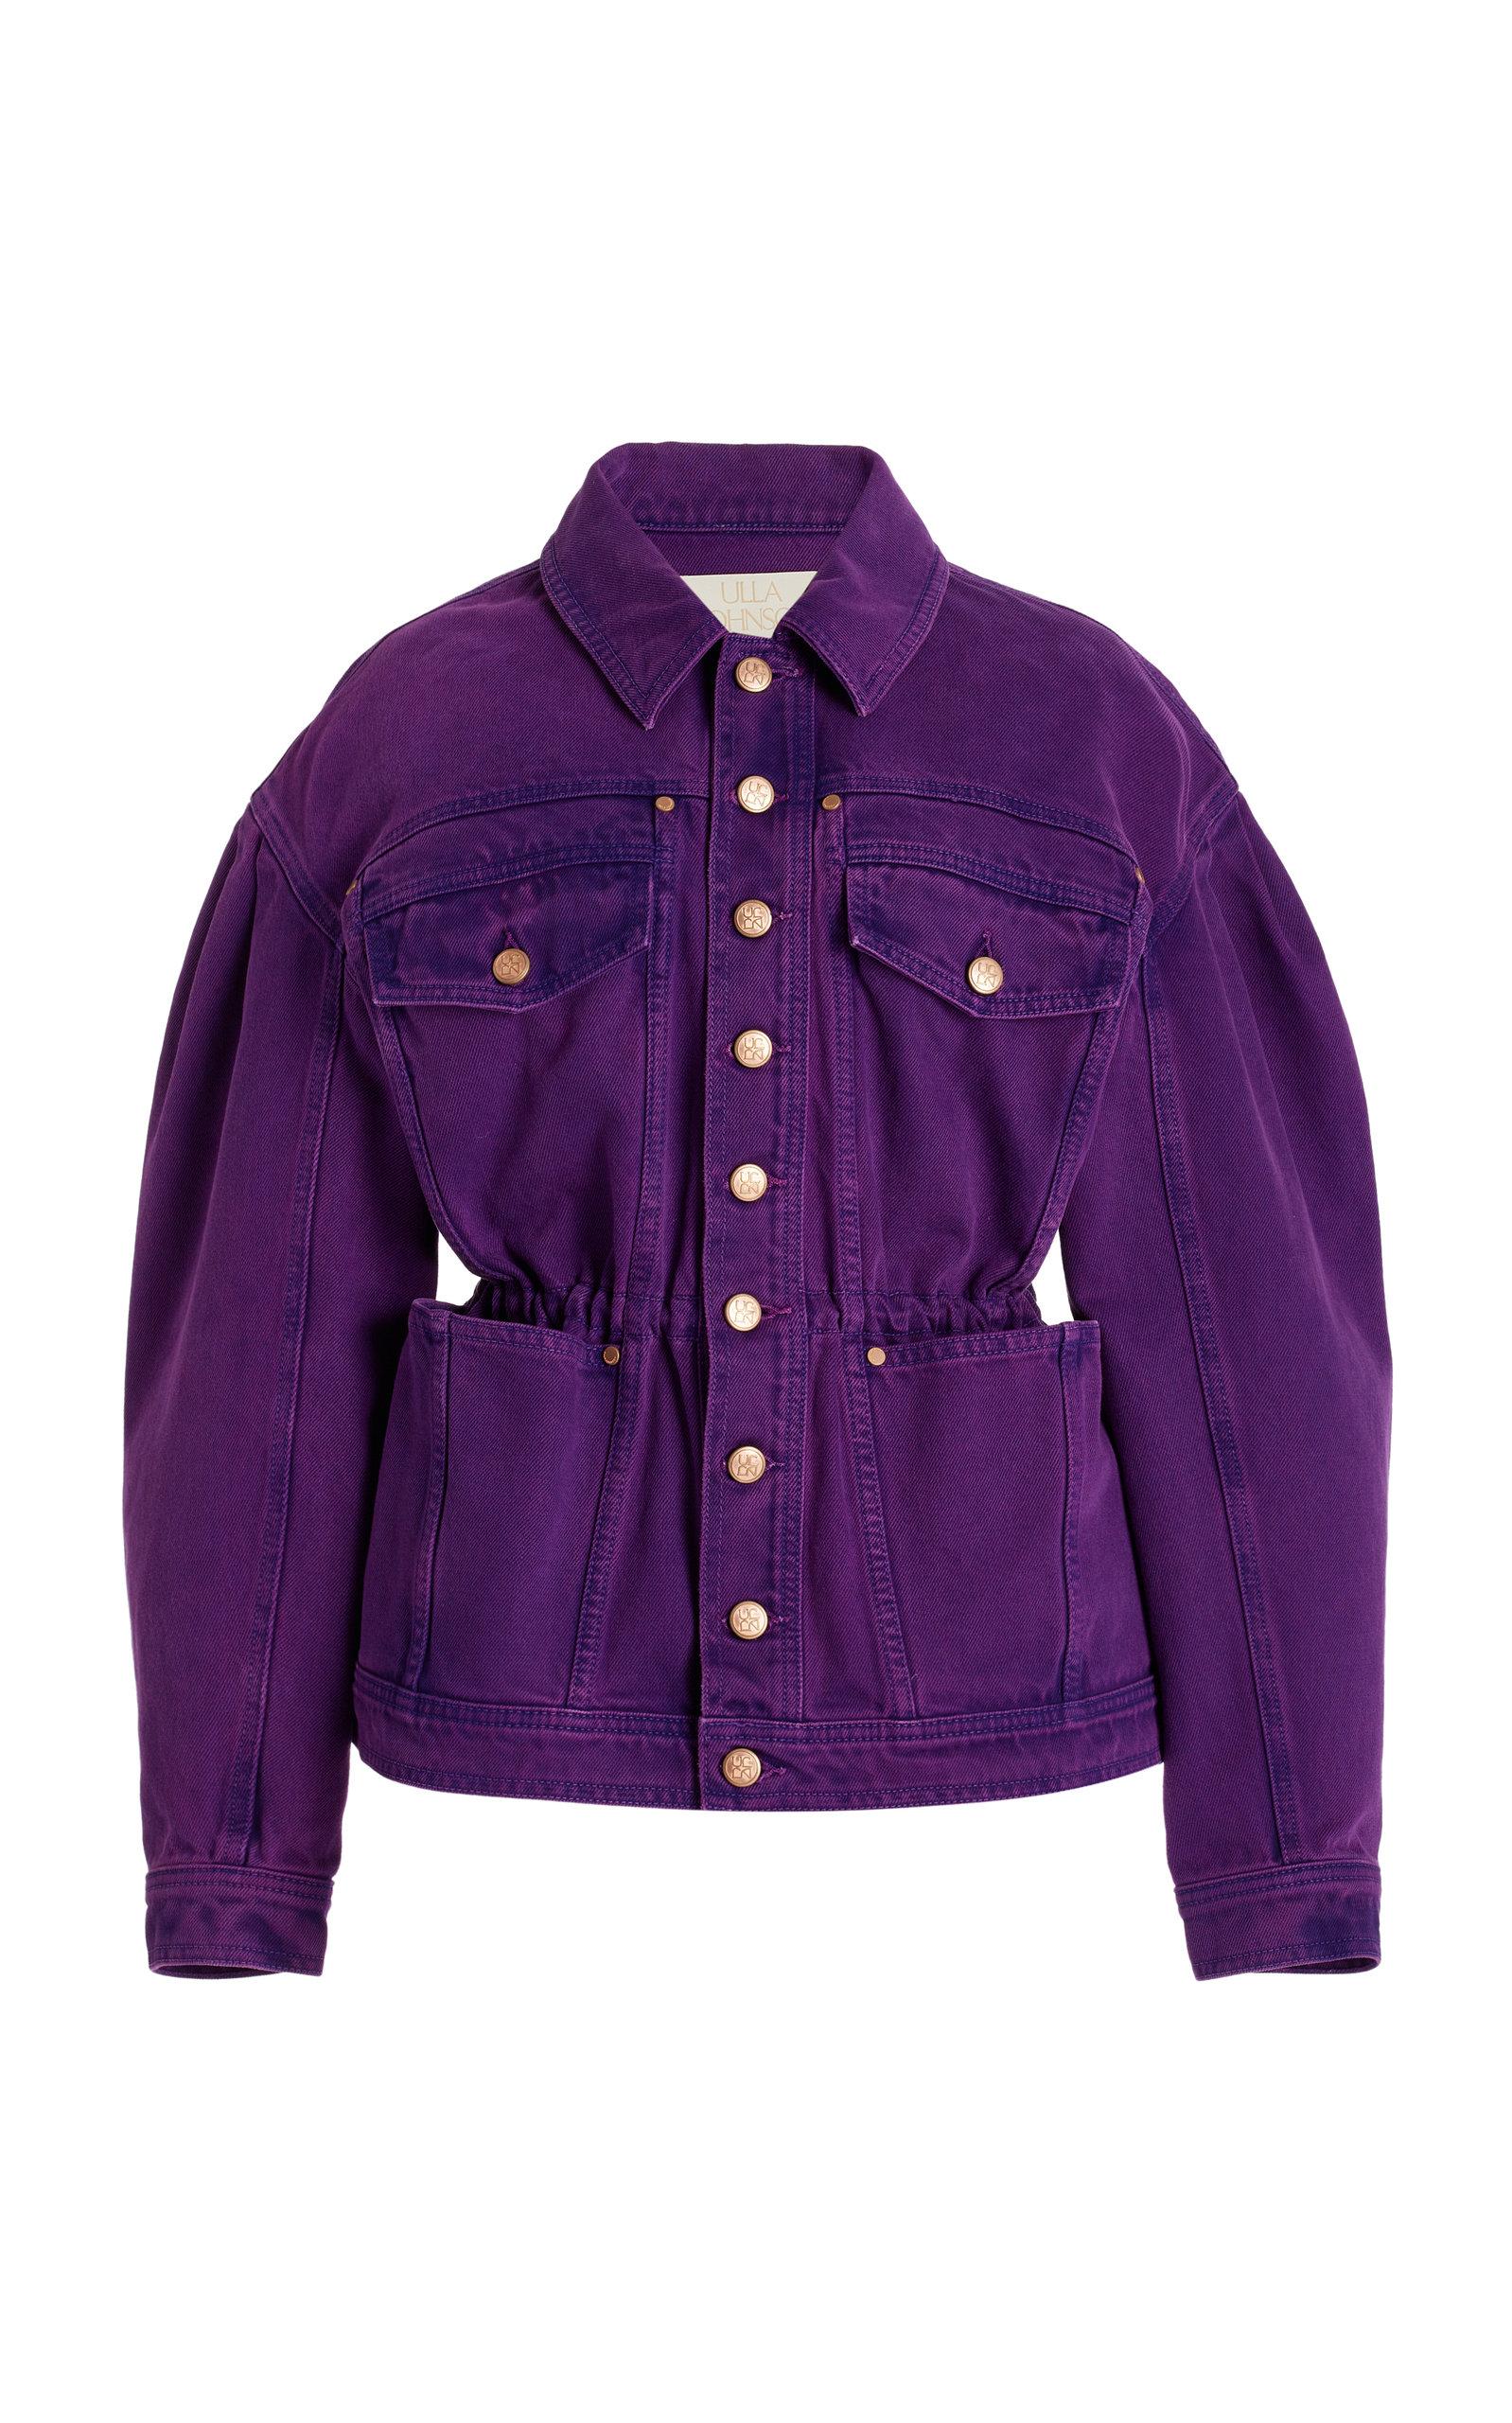 Odette Denim Jacket in Purple - Ulla Johnson